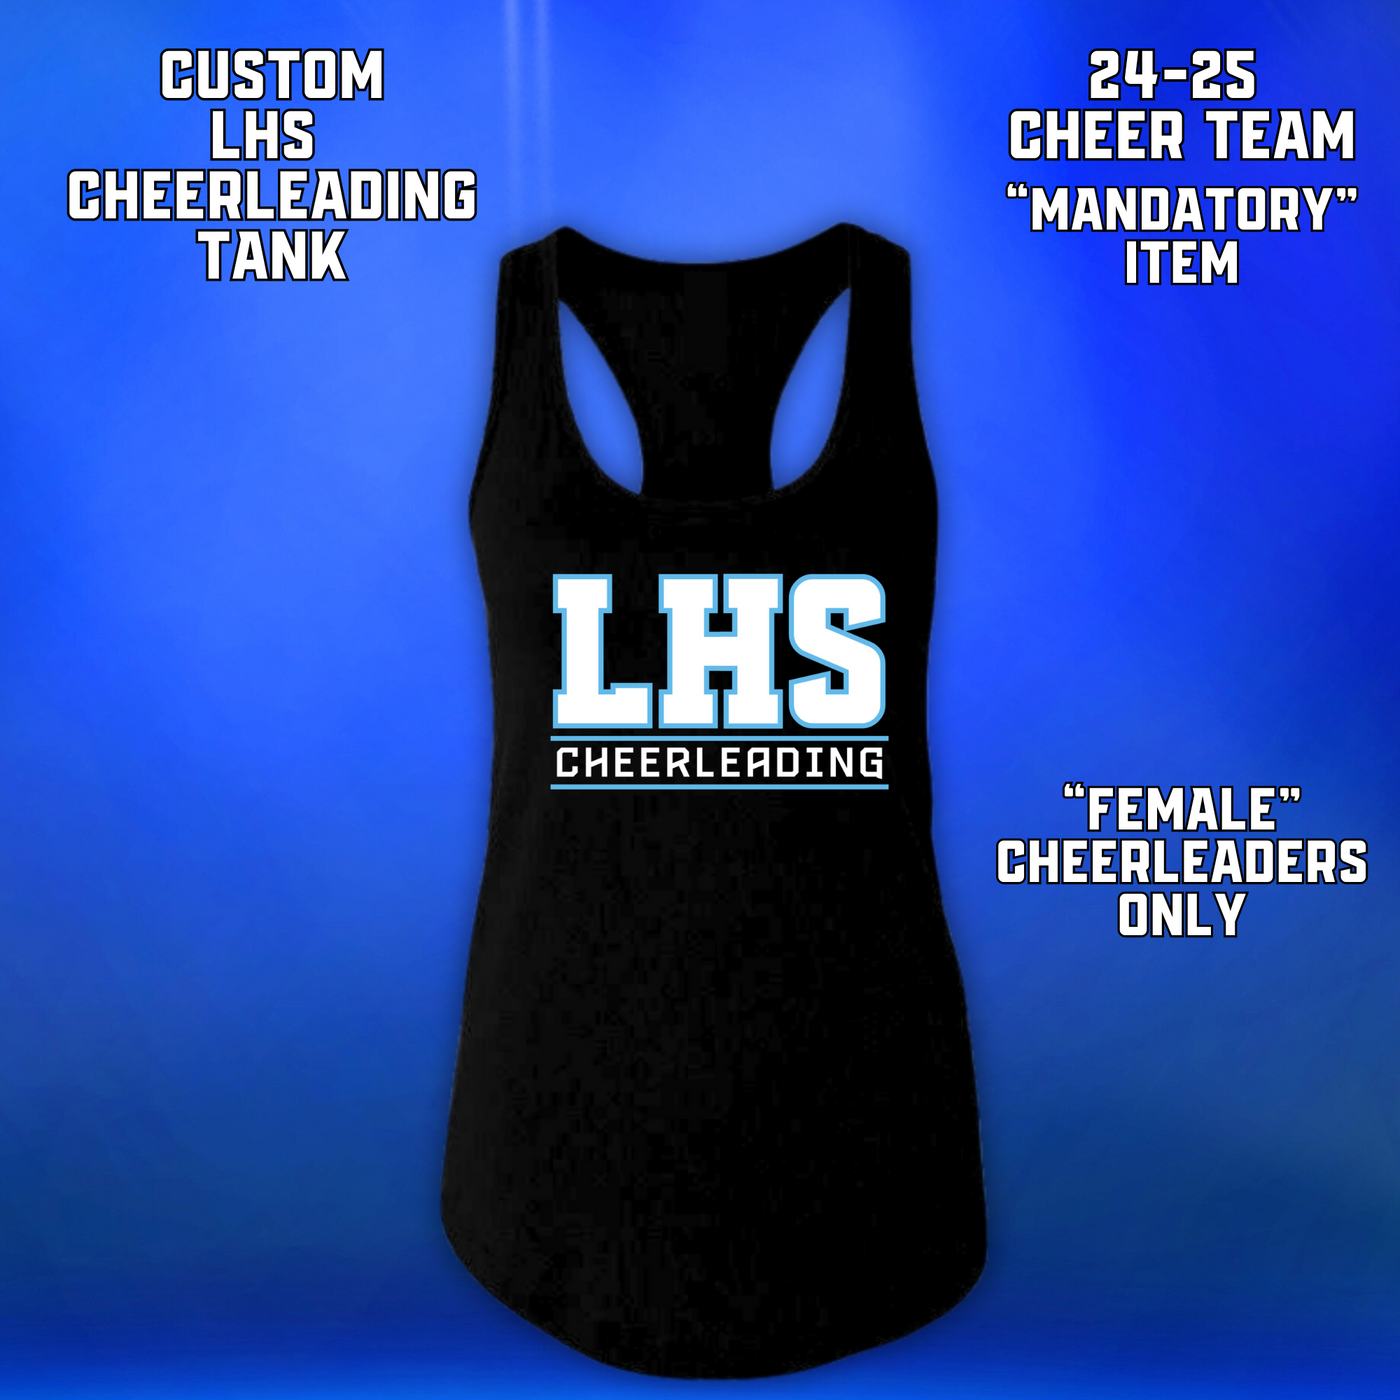 24-25 CHEER TEAM CUSTOM LHS Cheerleading Tank Black